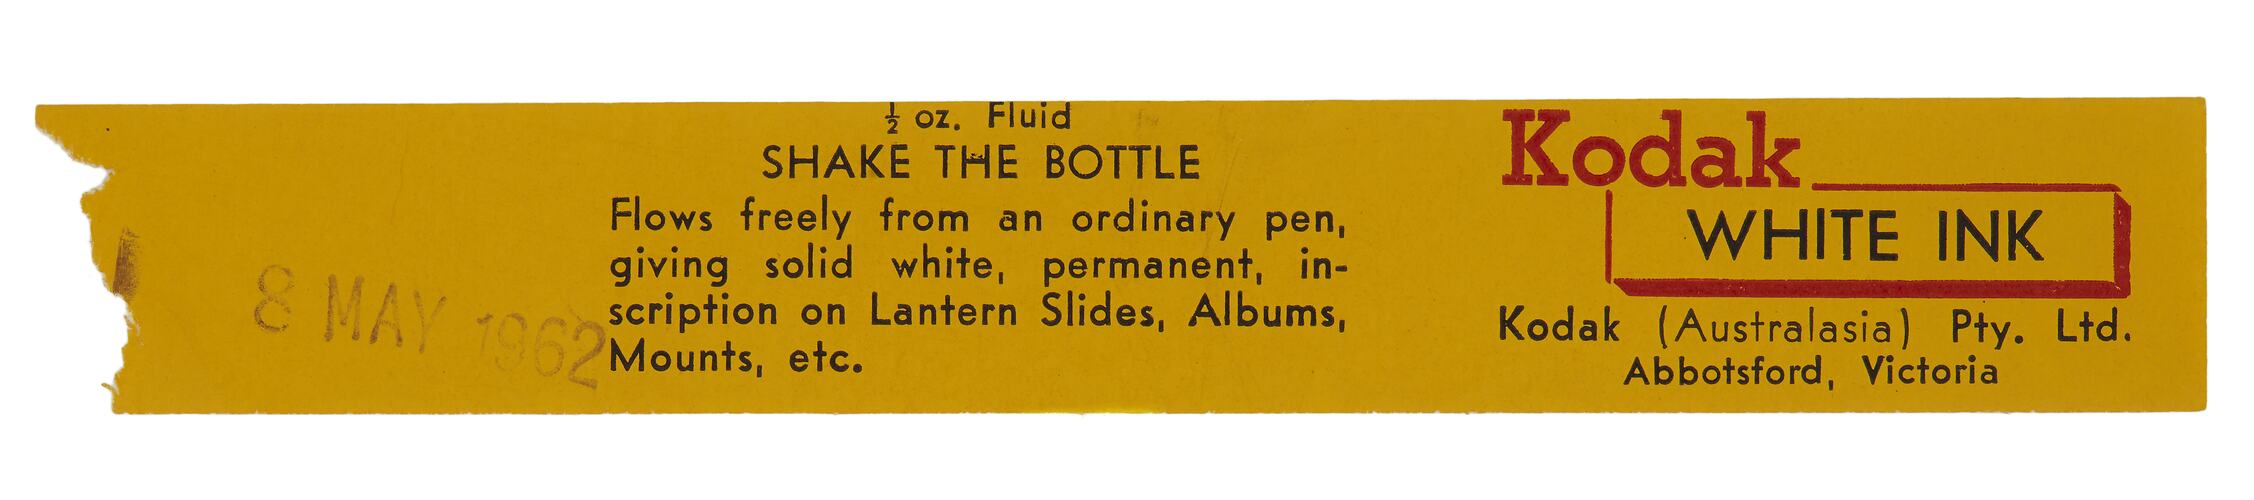 Label - Kodak (Australasia) Pty Ltd, Kodak White Ink, Abbotsford, 8 May 1962